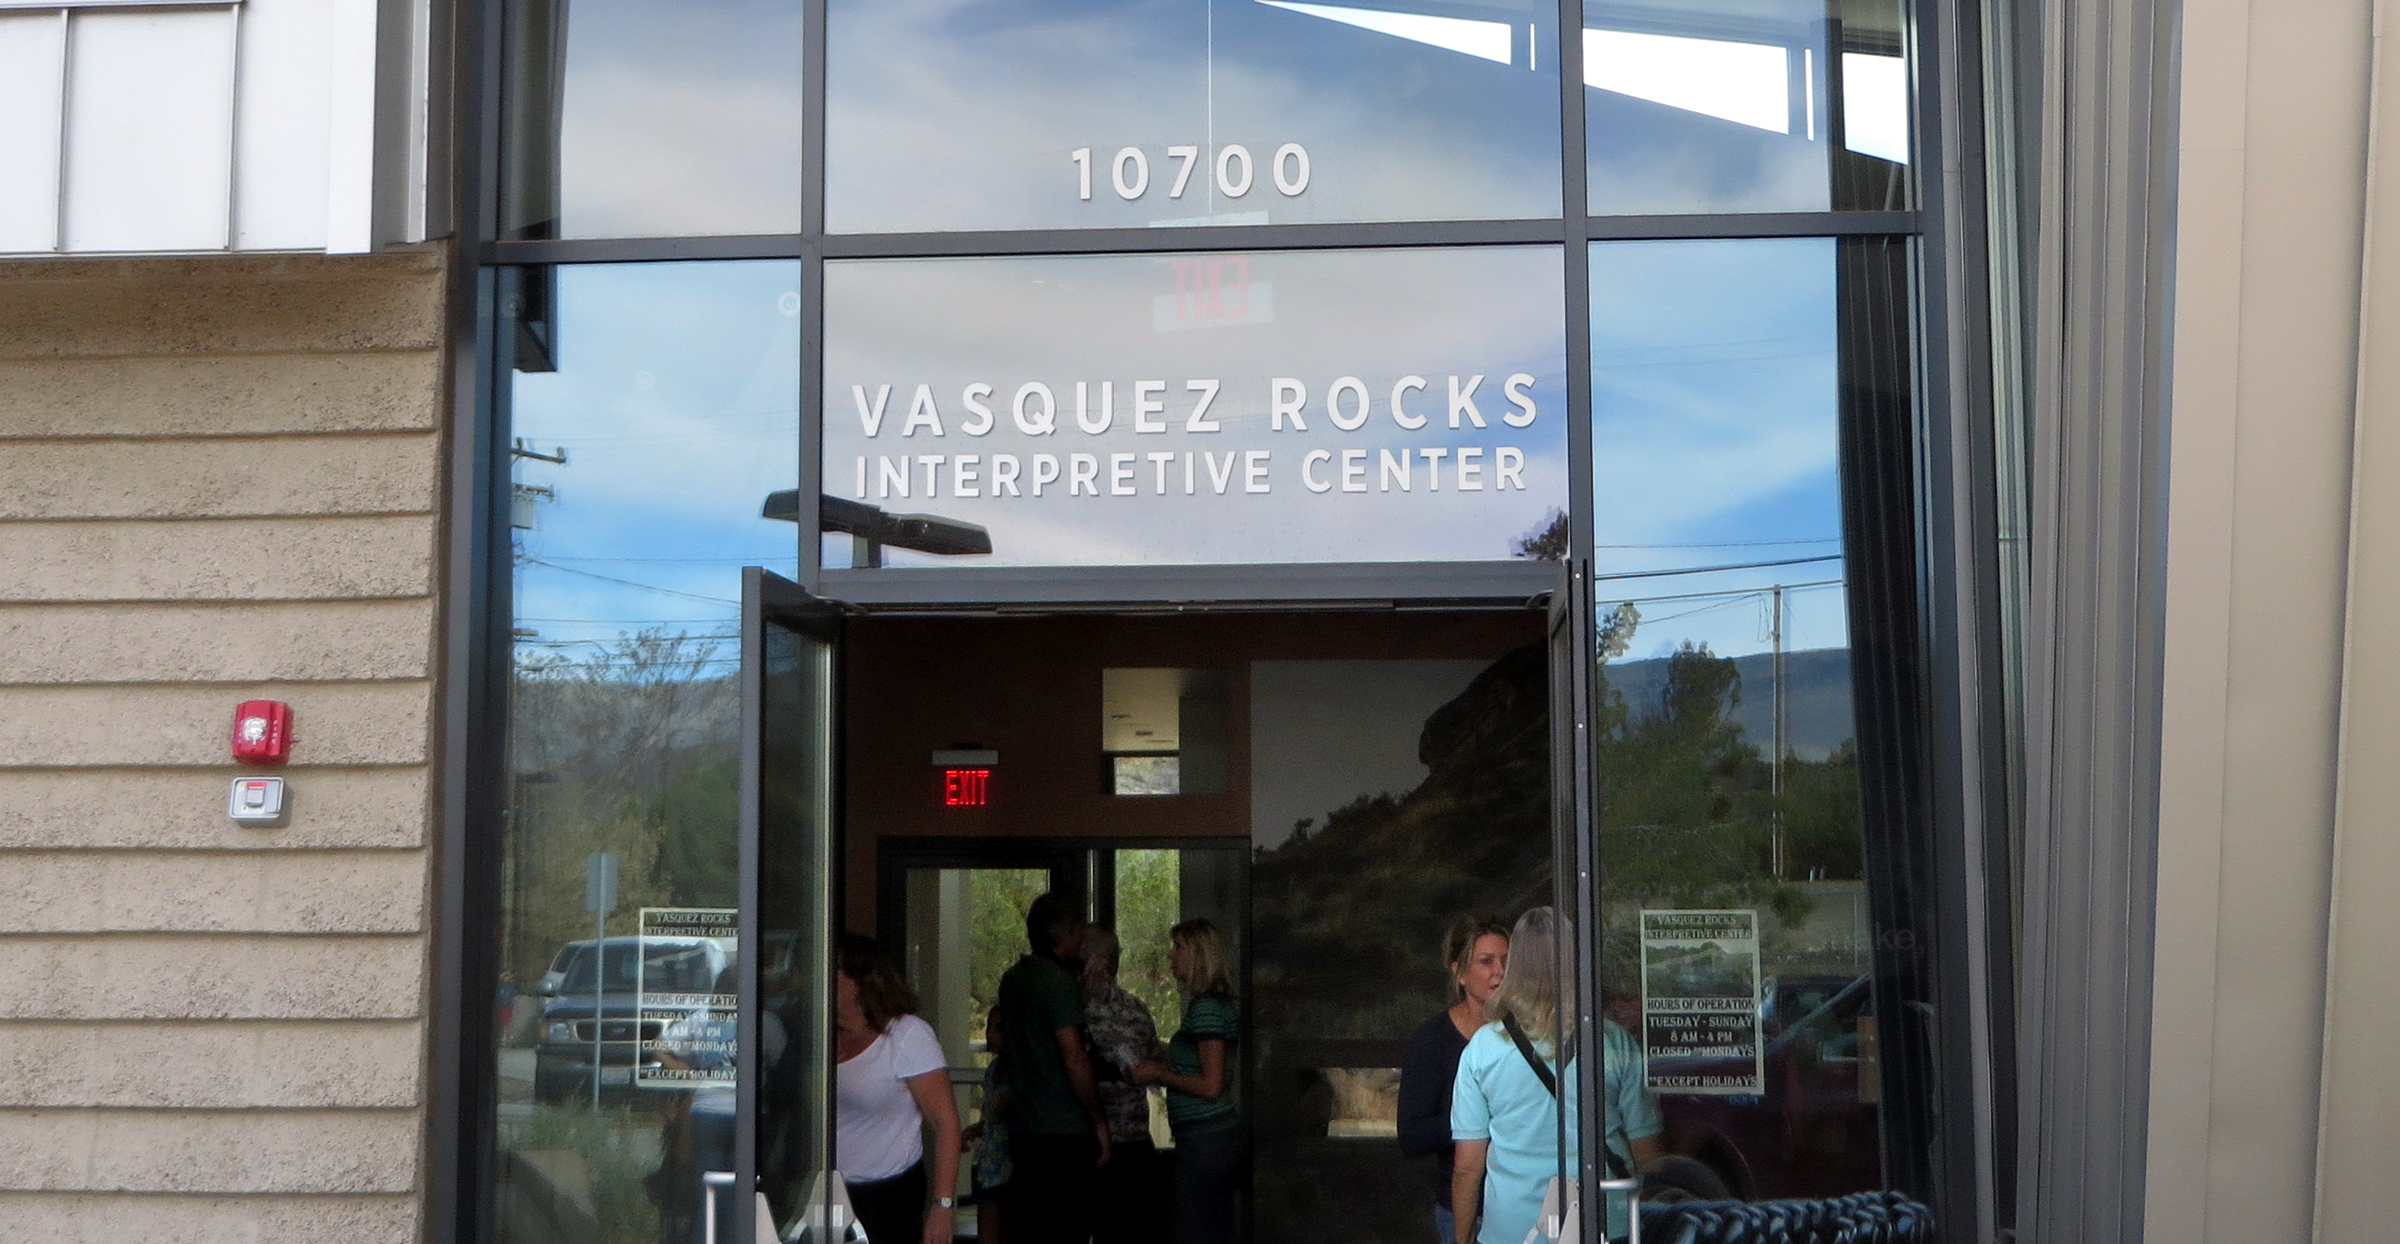 Vasquez Rocks Interpretive Center